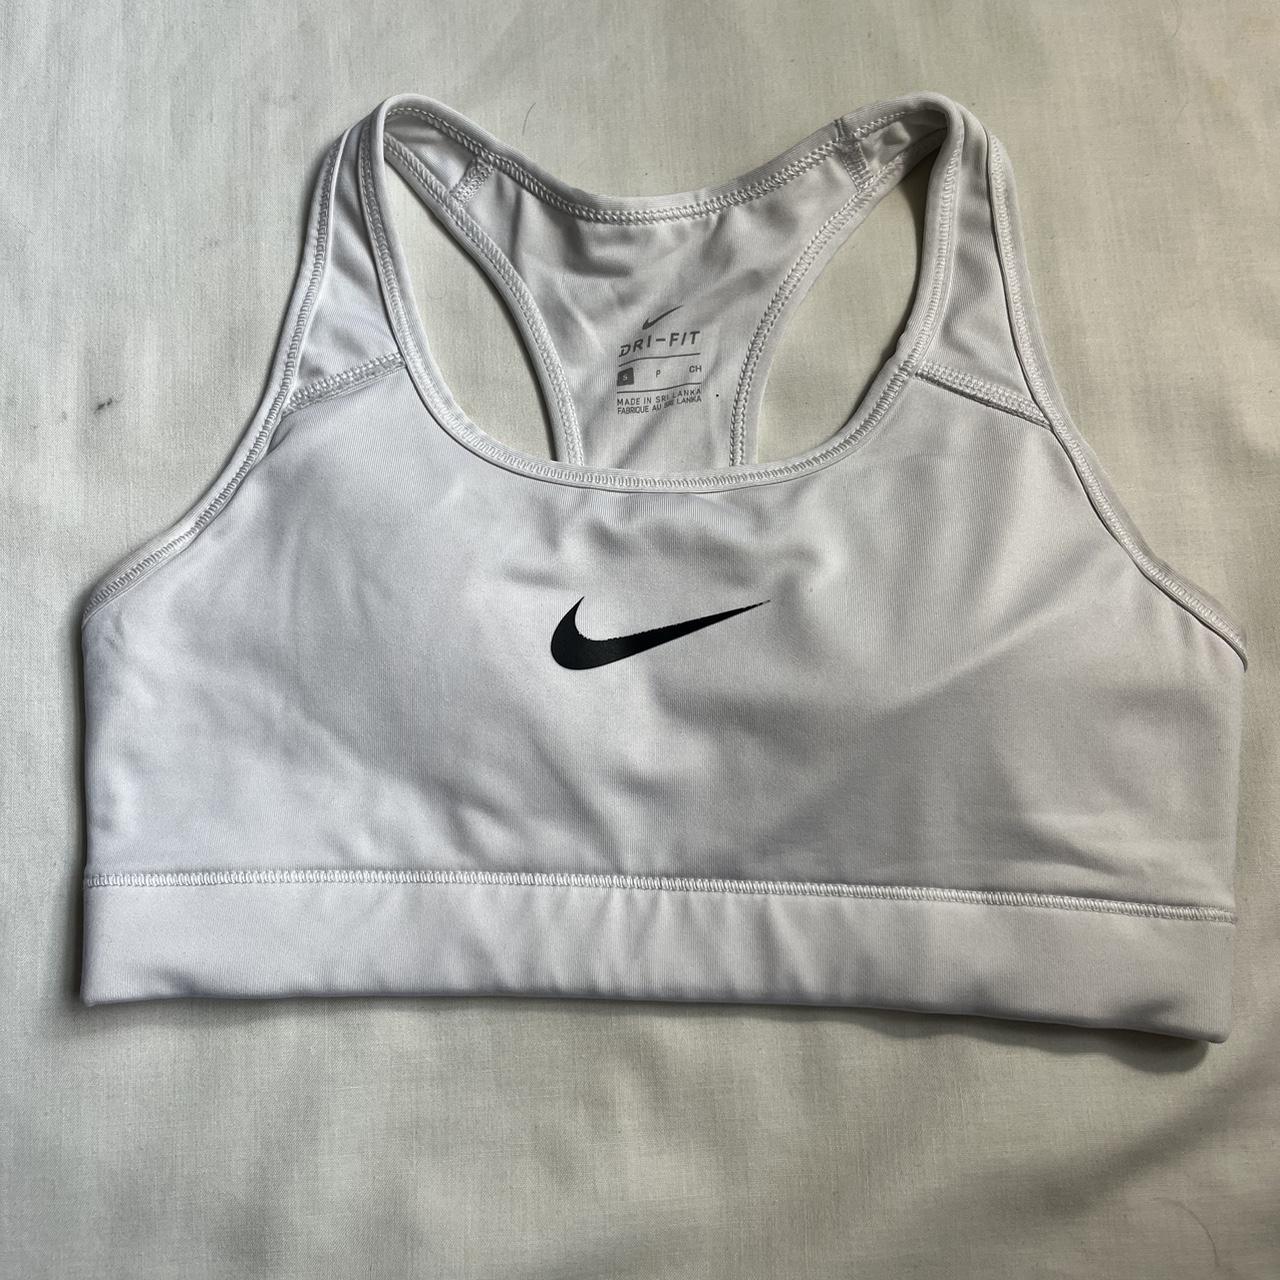 New Look sports bra size 6 #sportsbra #fitness - Depop